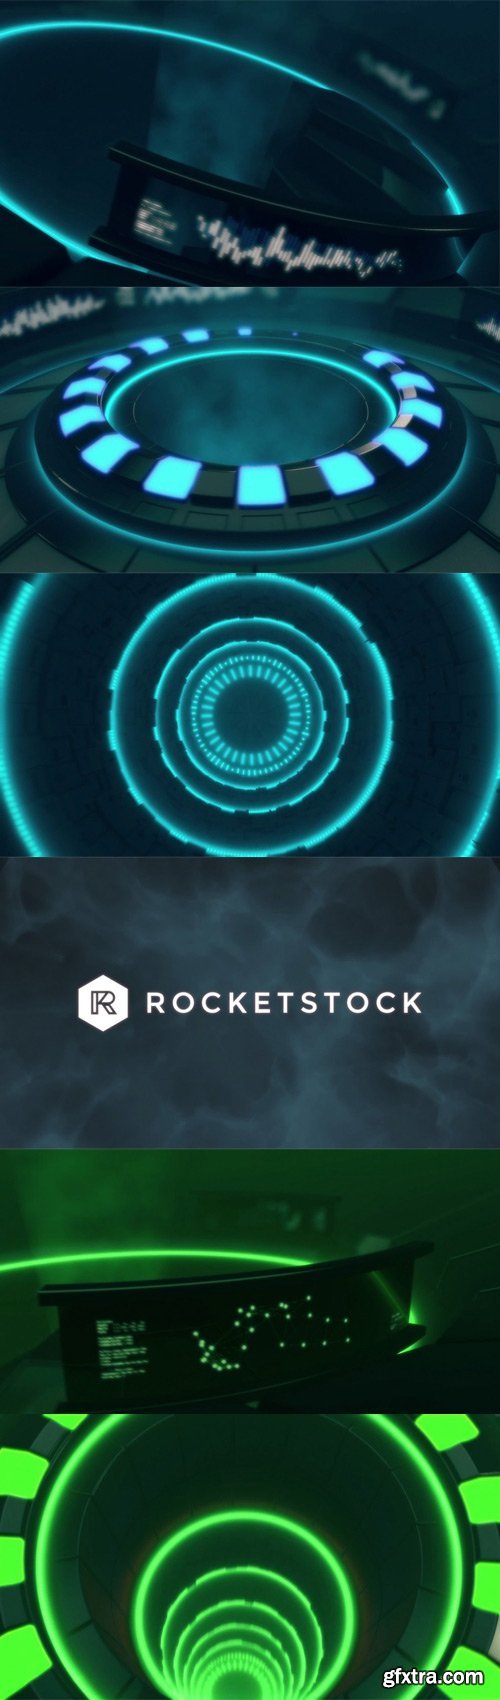 RocketStock - Accelerator - High Tech Logo Reveal